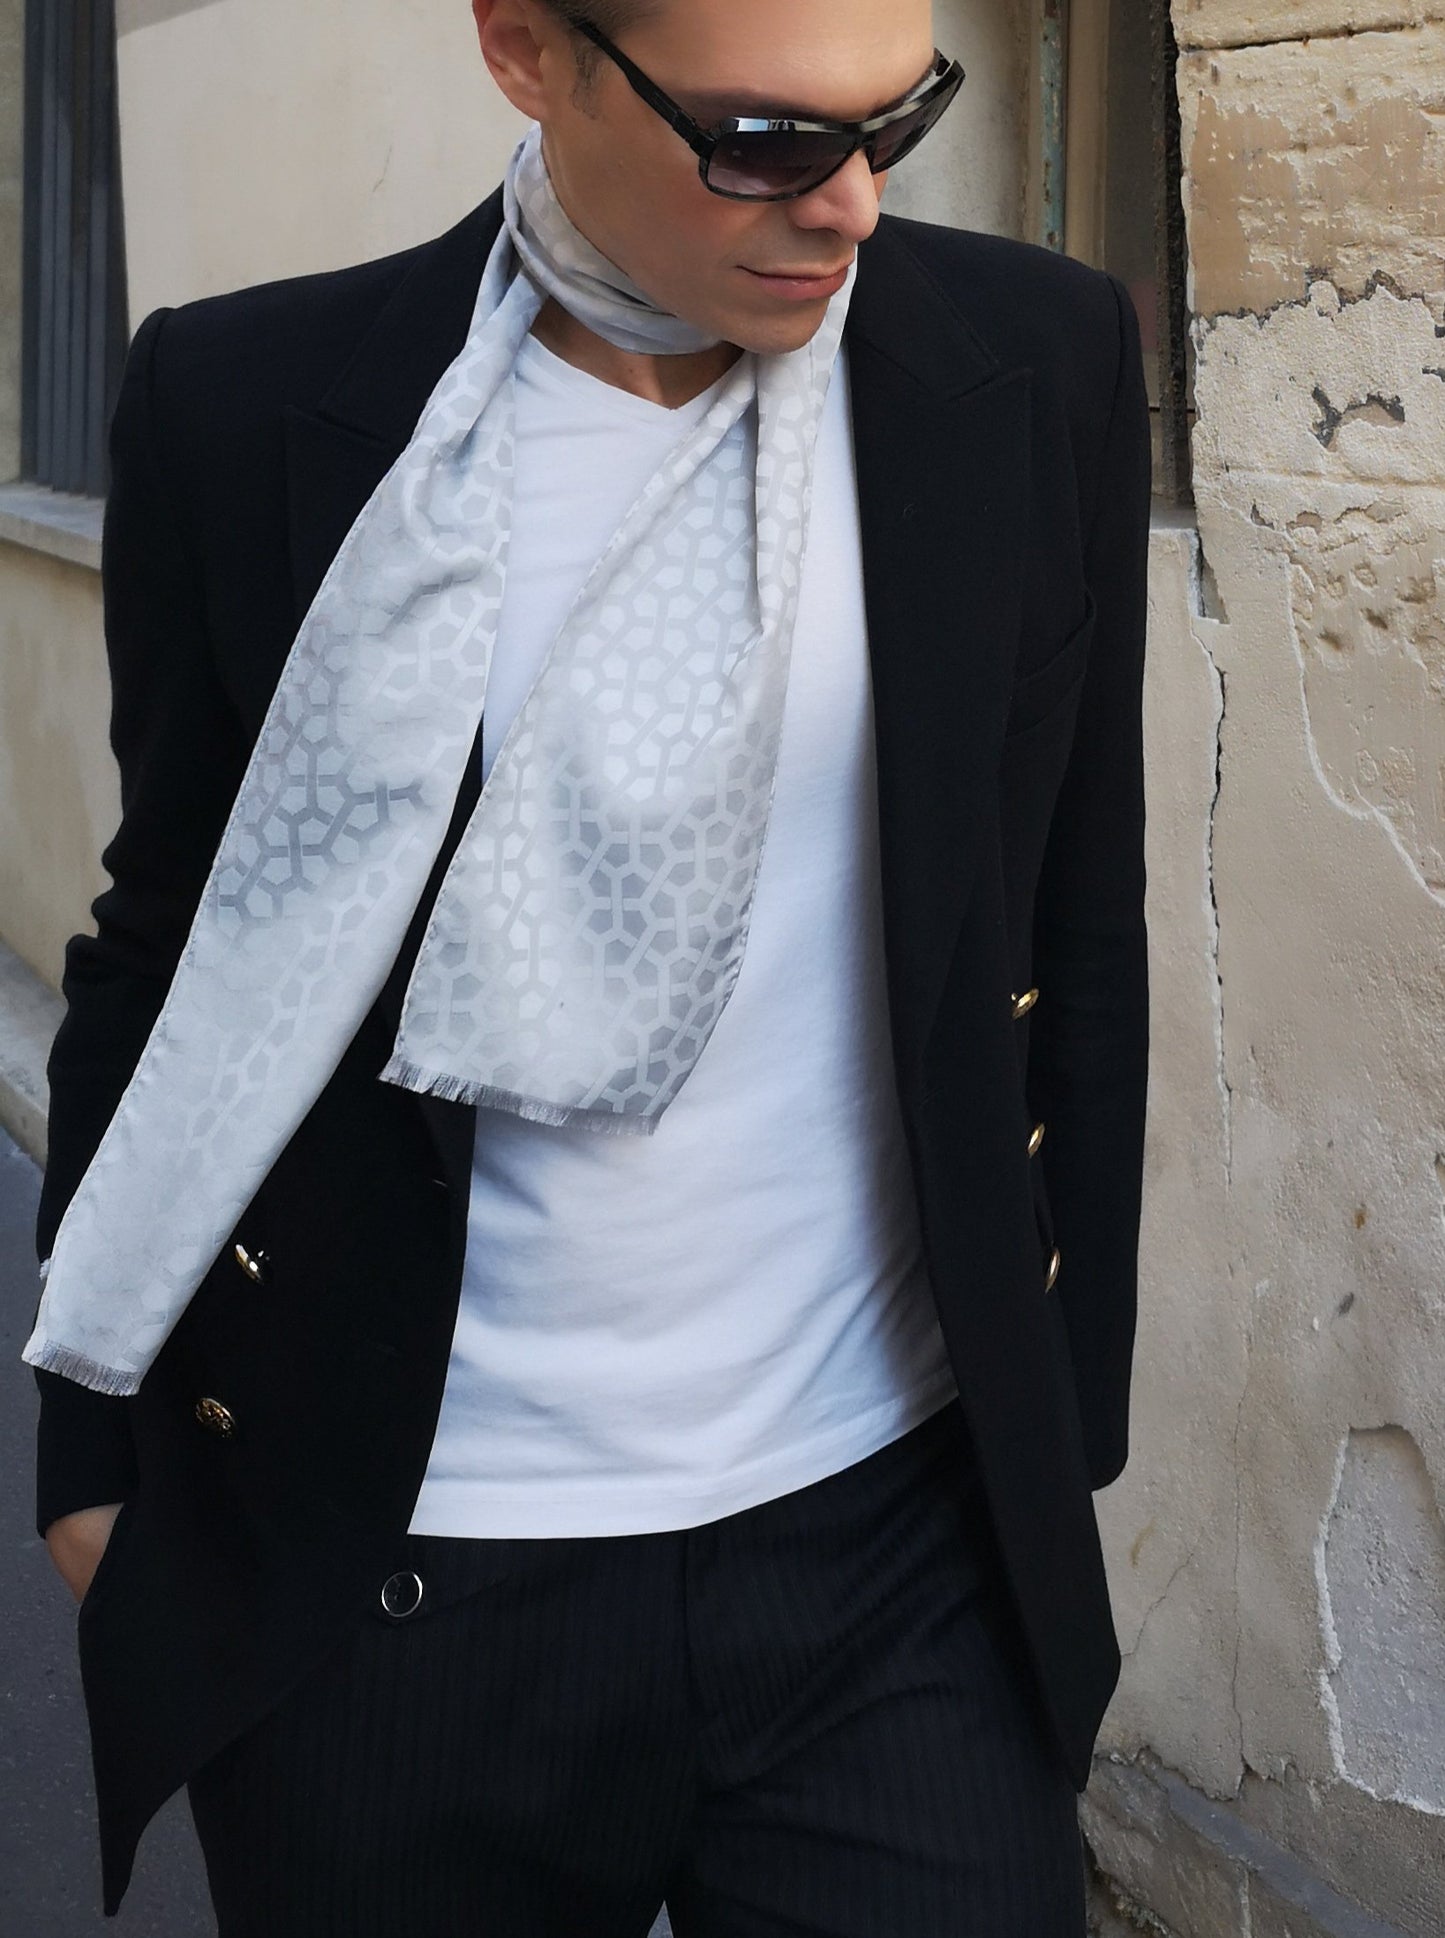 dandy luxury scarf silk wool made in France